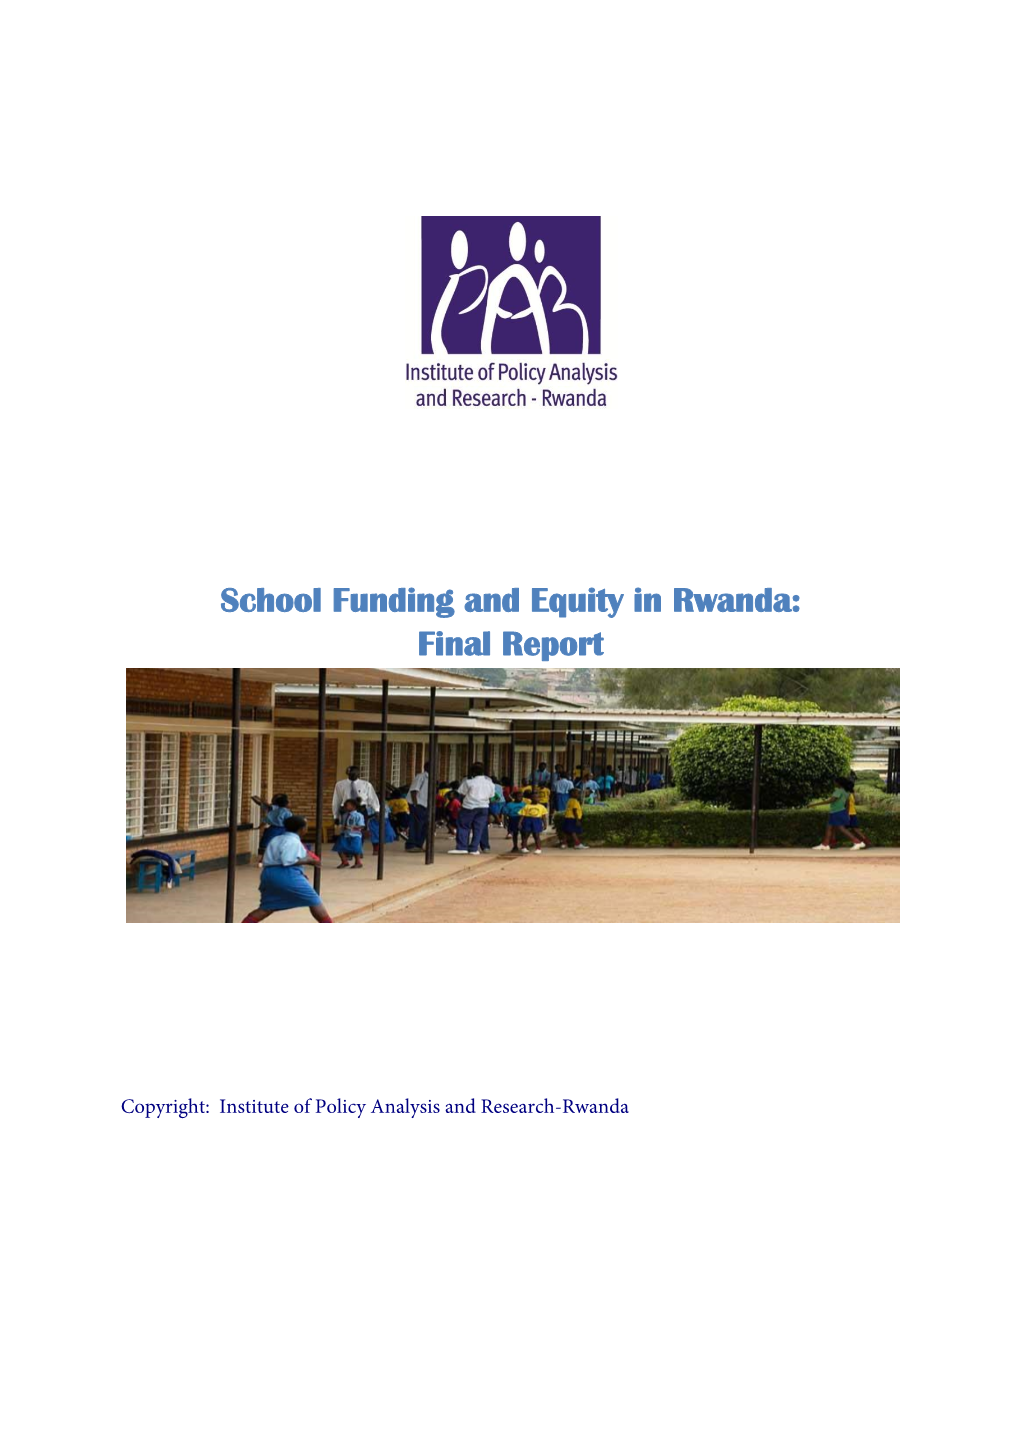 School Funding and Equity in Rwanda: Final Report